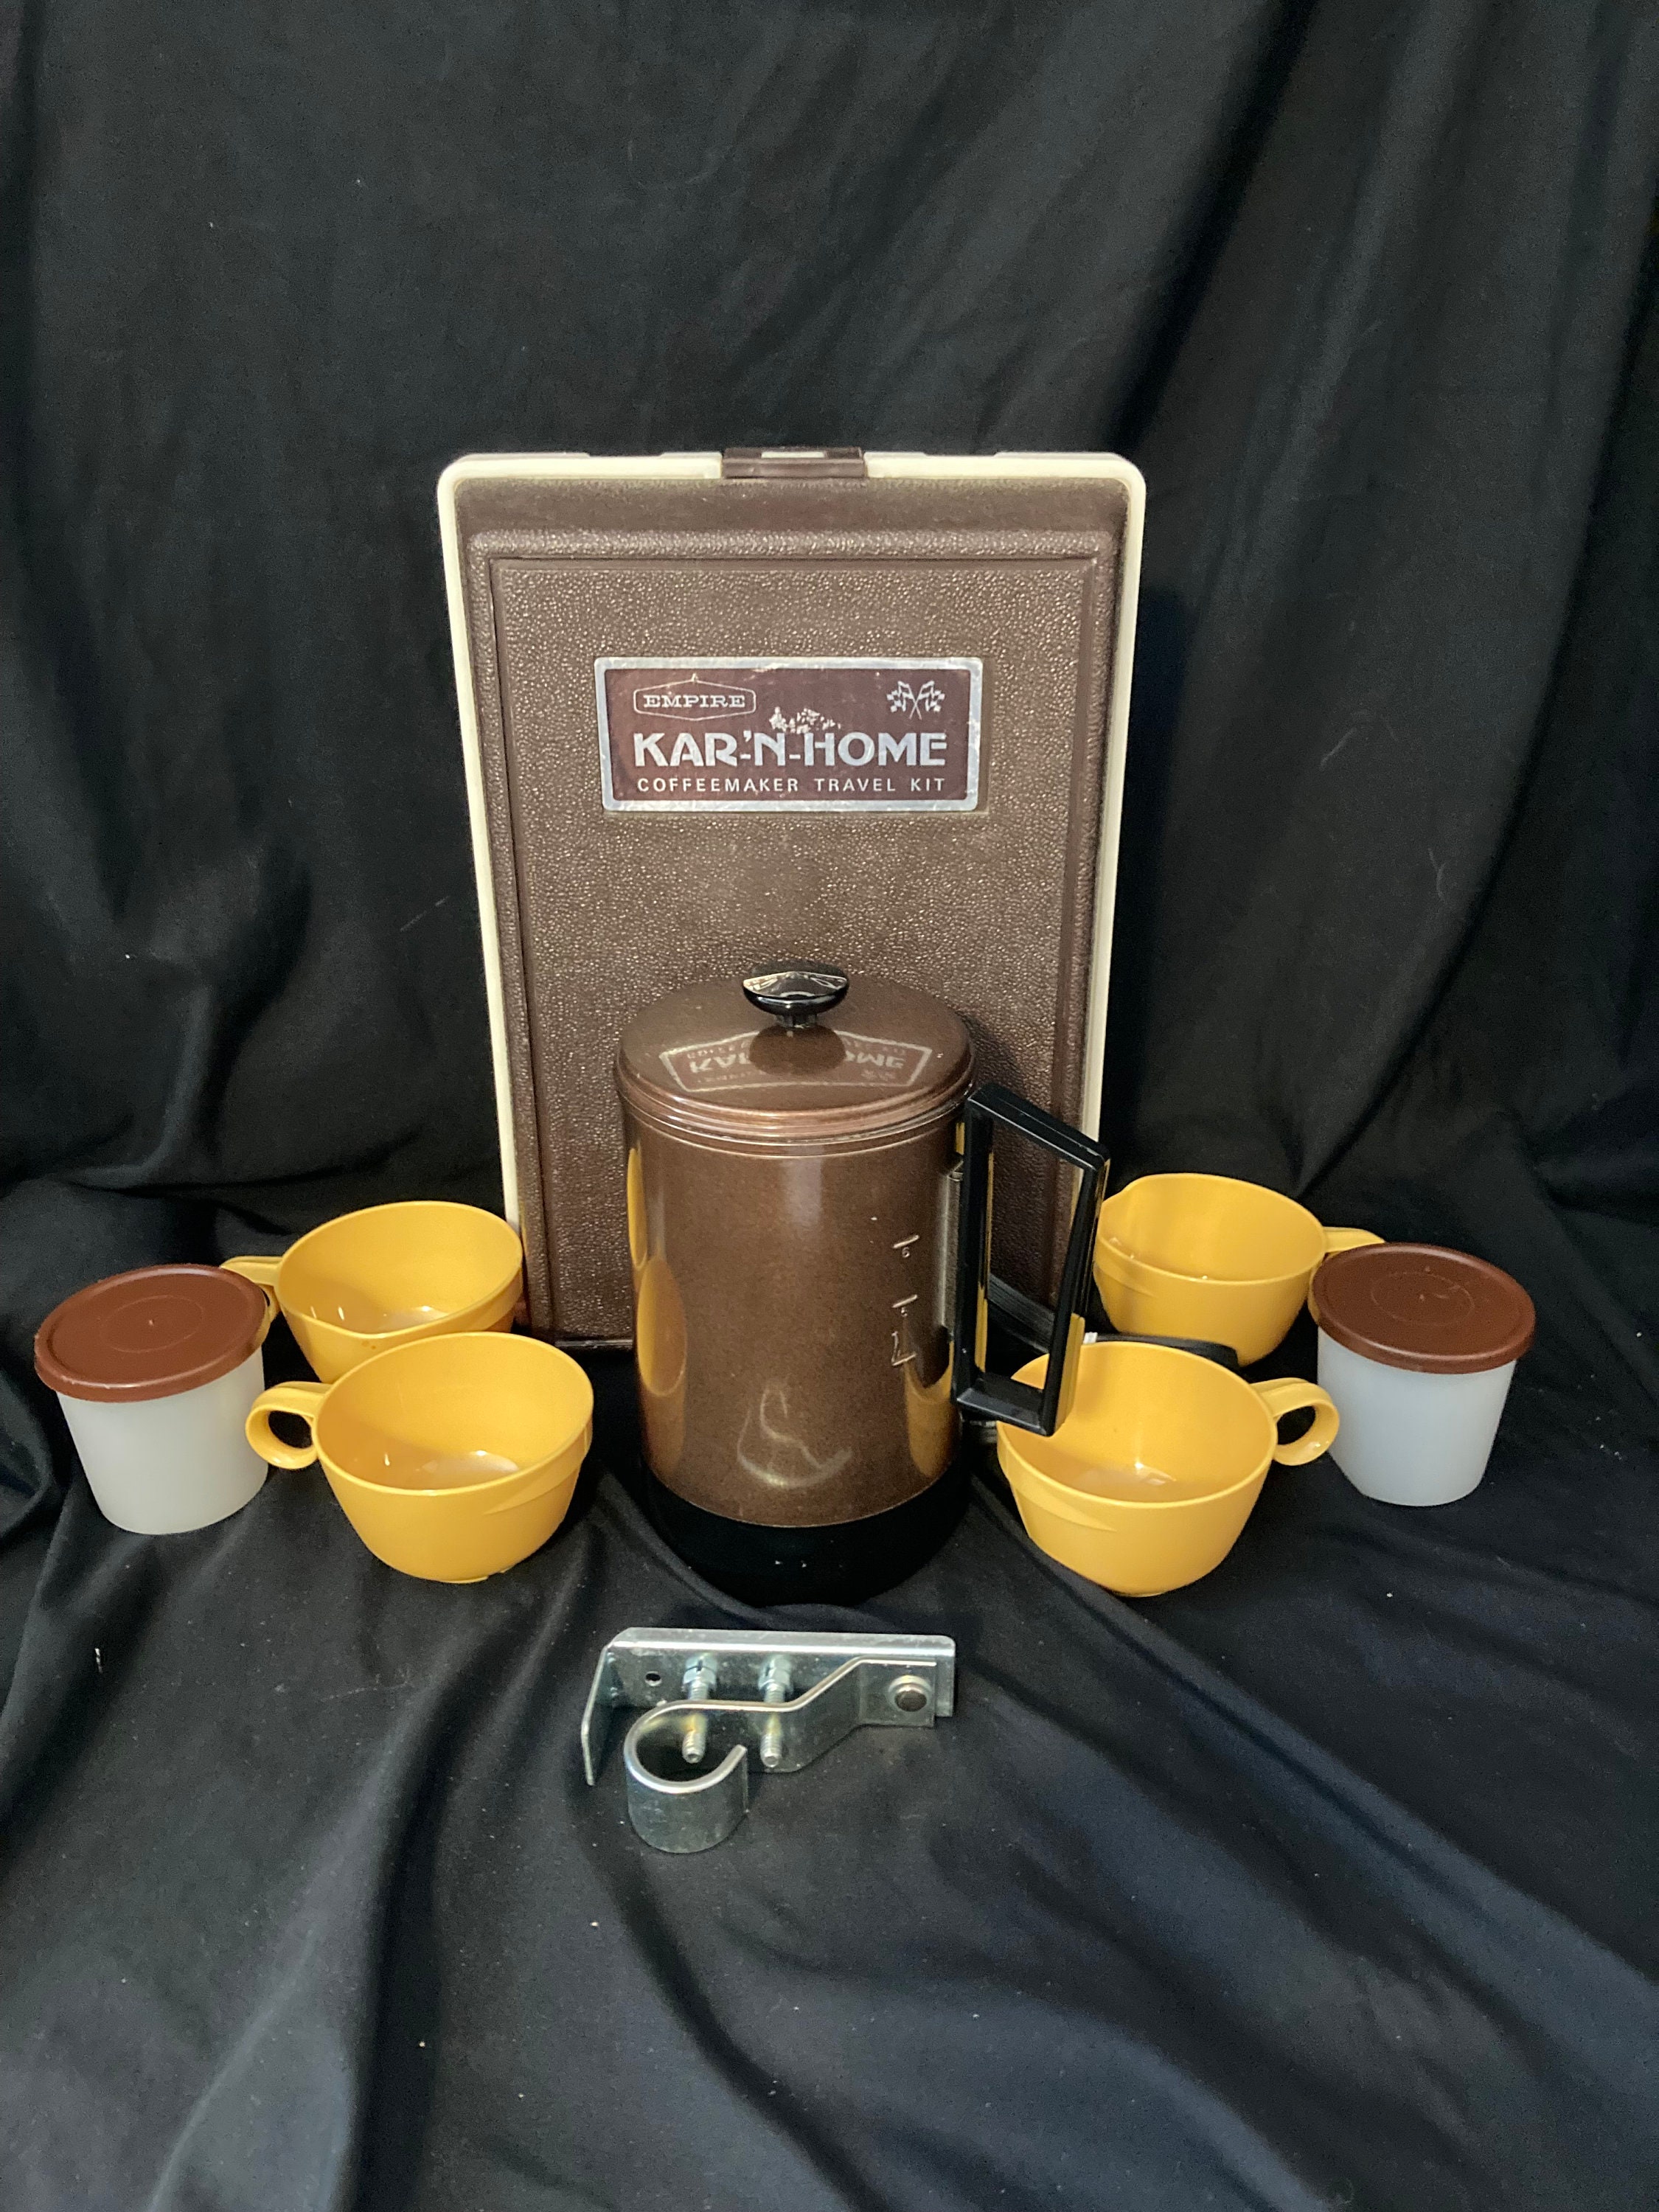 Vintage Empire 3 Cup Electric Percolator Coffee Maker Aluminum Black Handle  